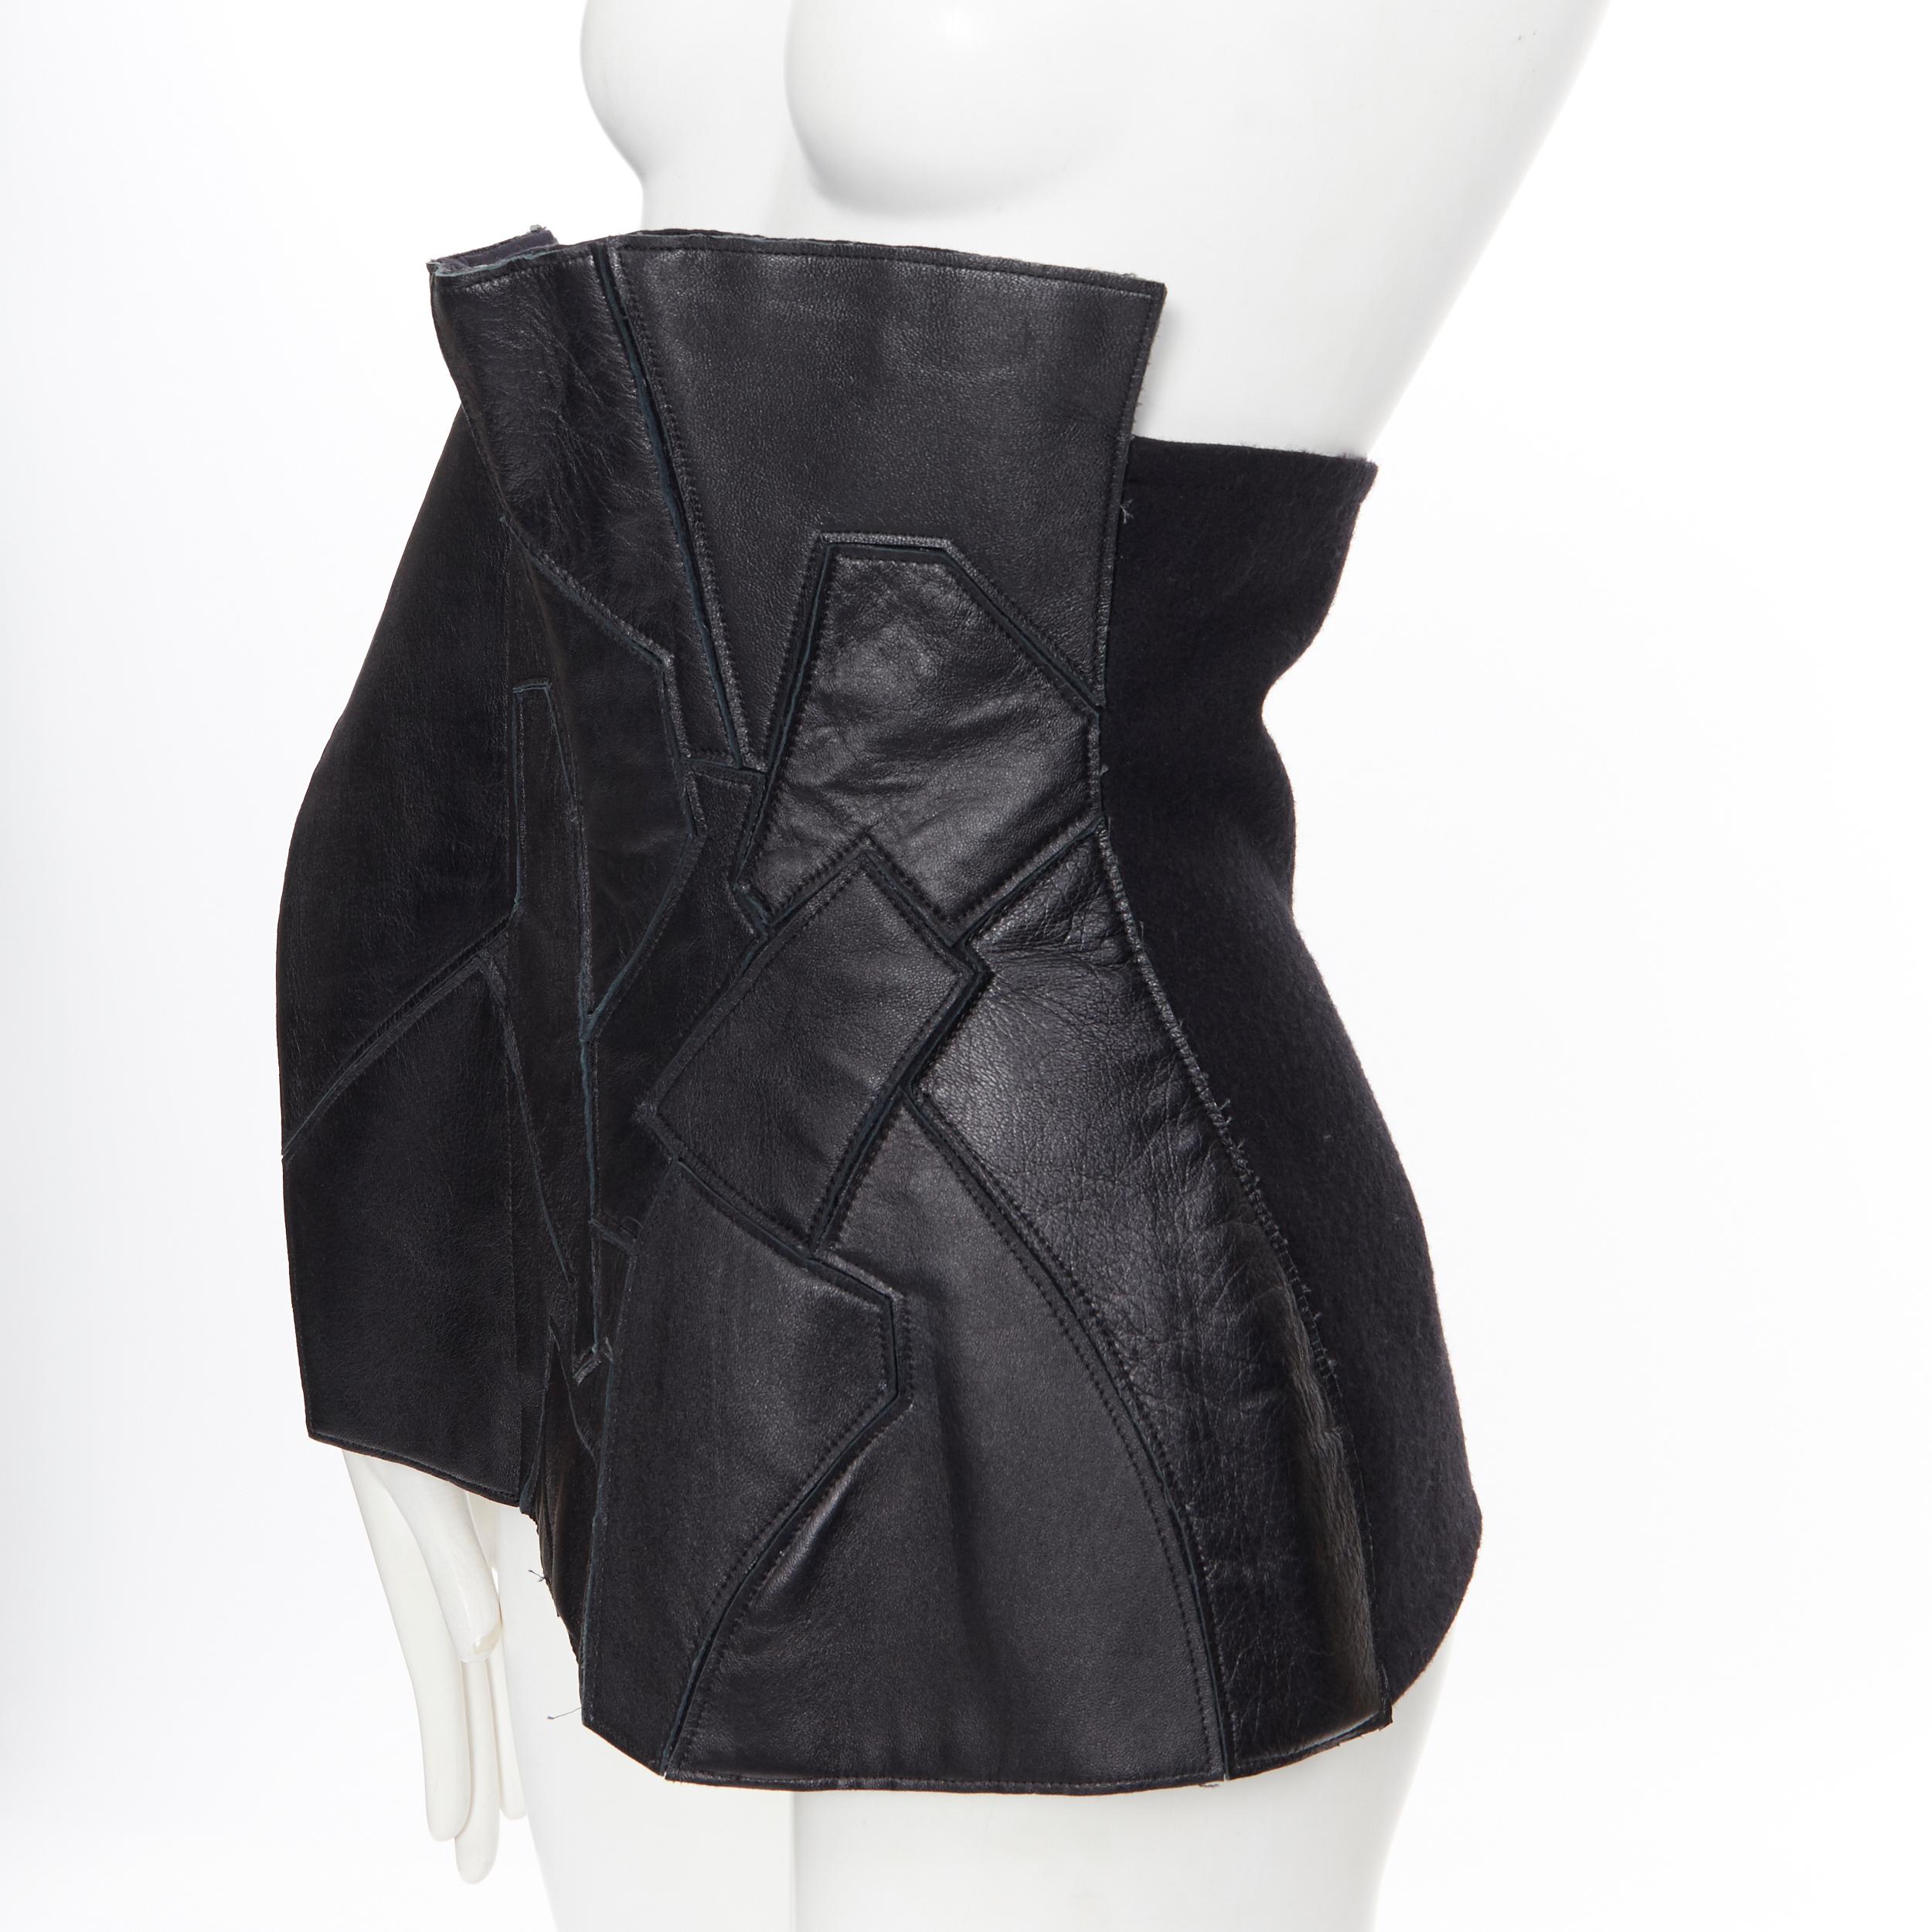 new YOHJI YAMAMOTO AW18 Runway black leather patchwork corset bustier belt JP2 M
Brand: Yohji Yamamoto
Designer: Yohji Yamamoto
Collection: AW18
Model Name / Style: Leather bustier
Material: Leather, wool
Color: Black
Pattern: Solid
Closure: